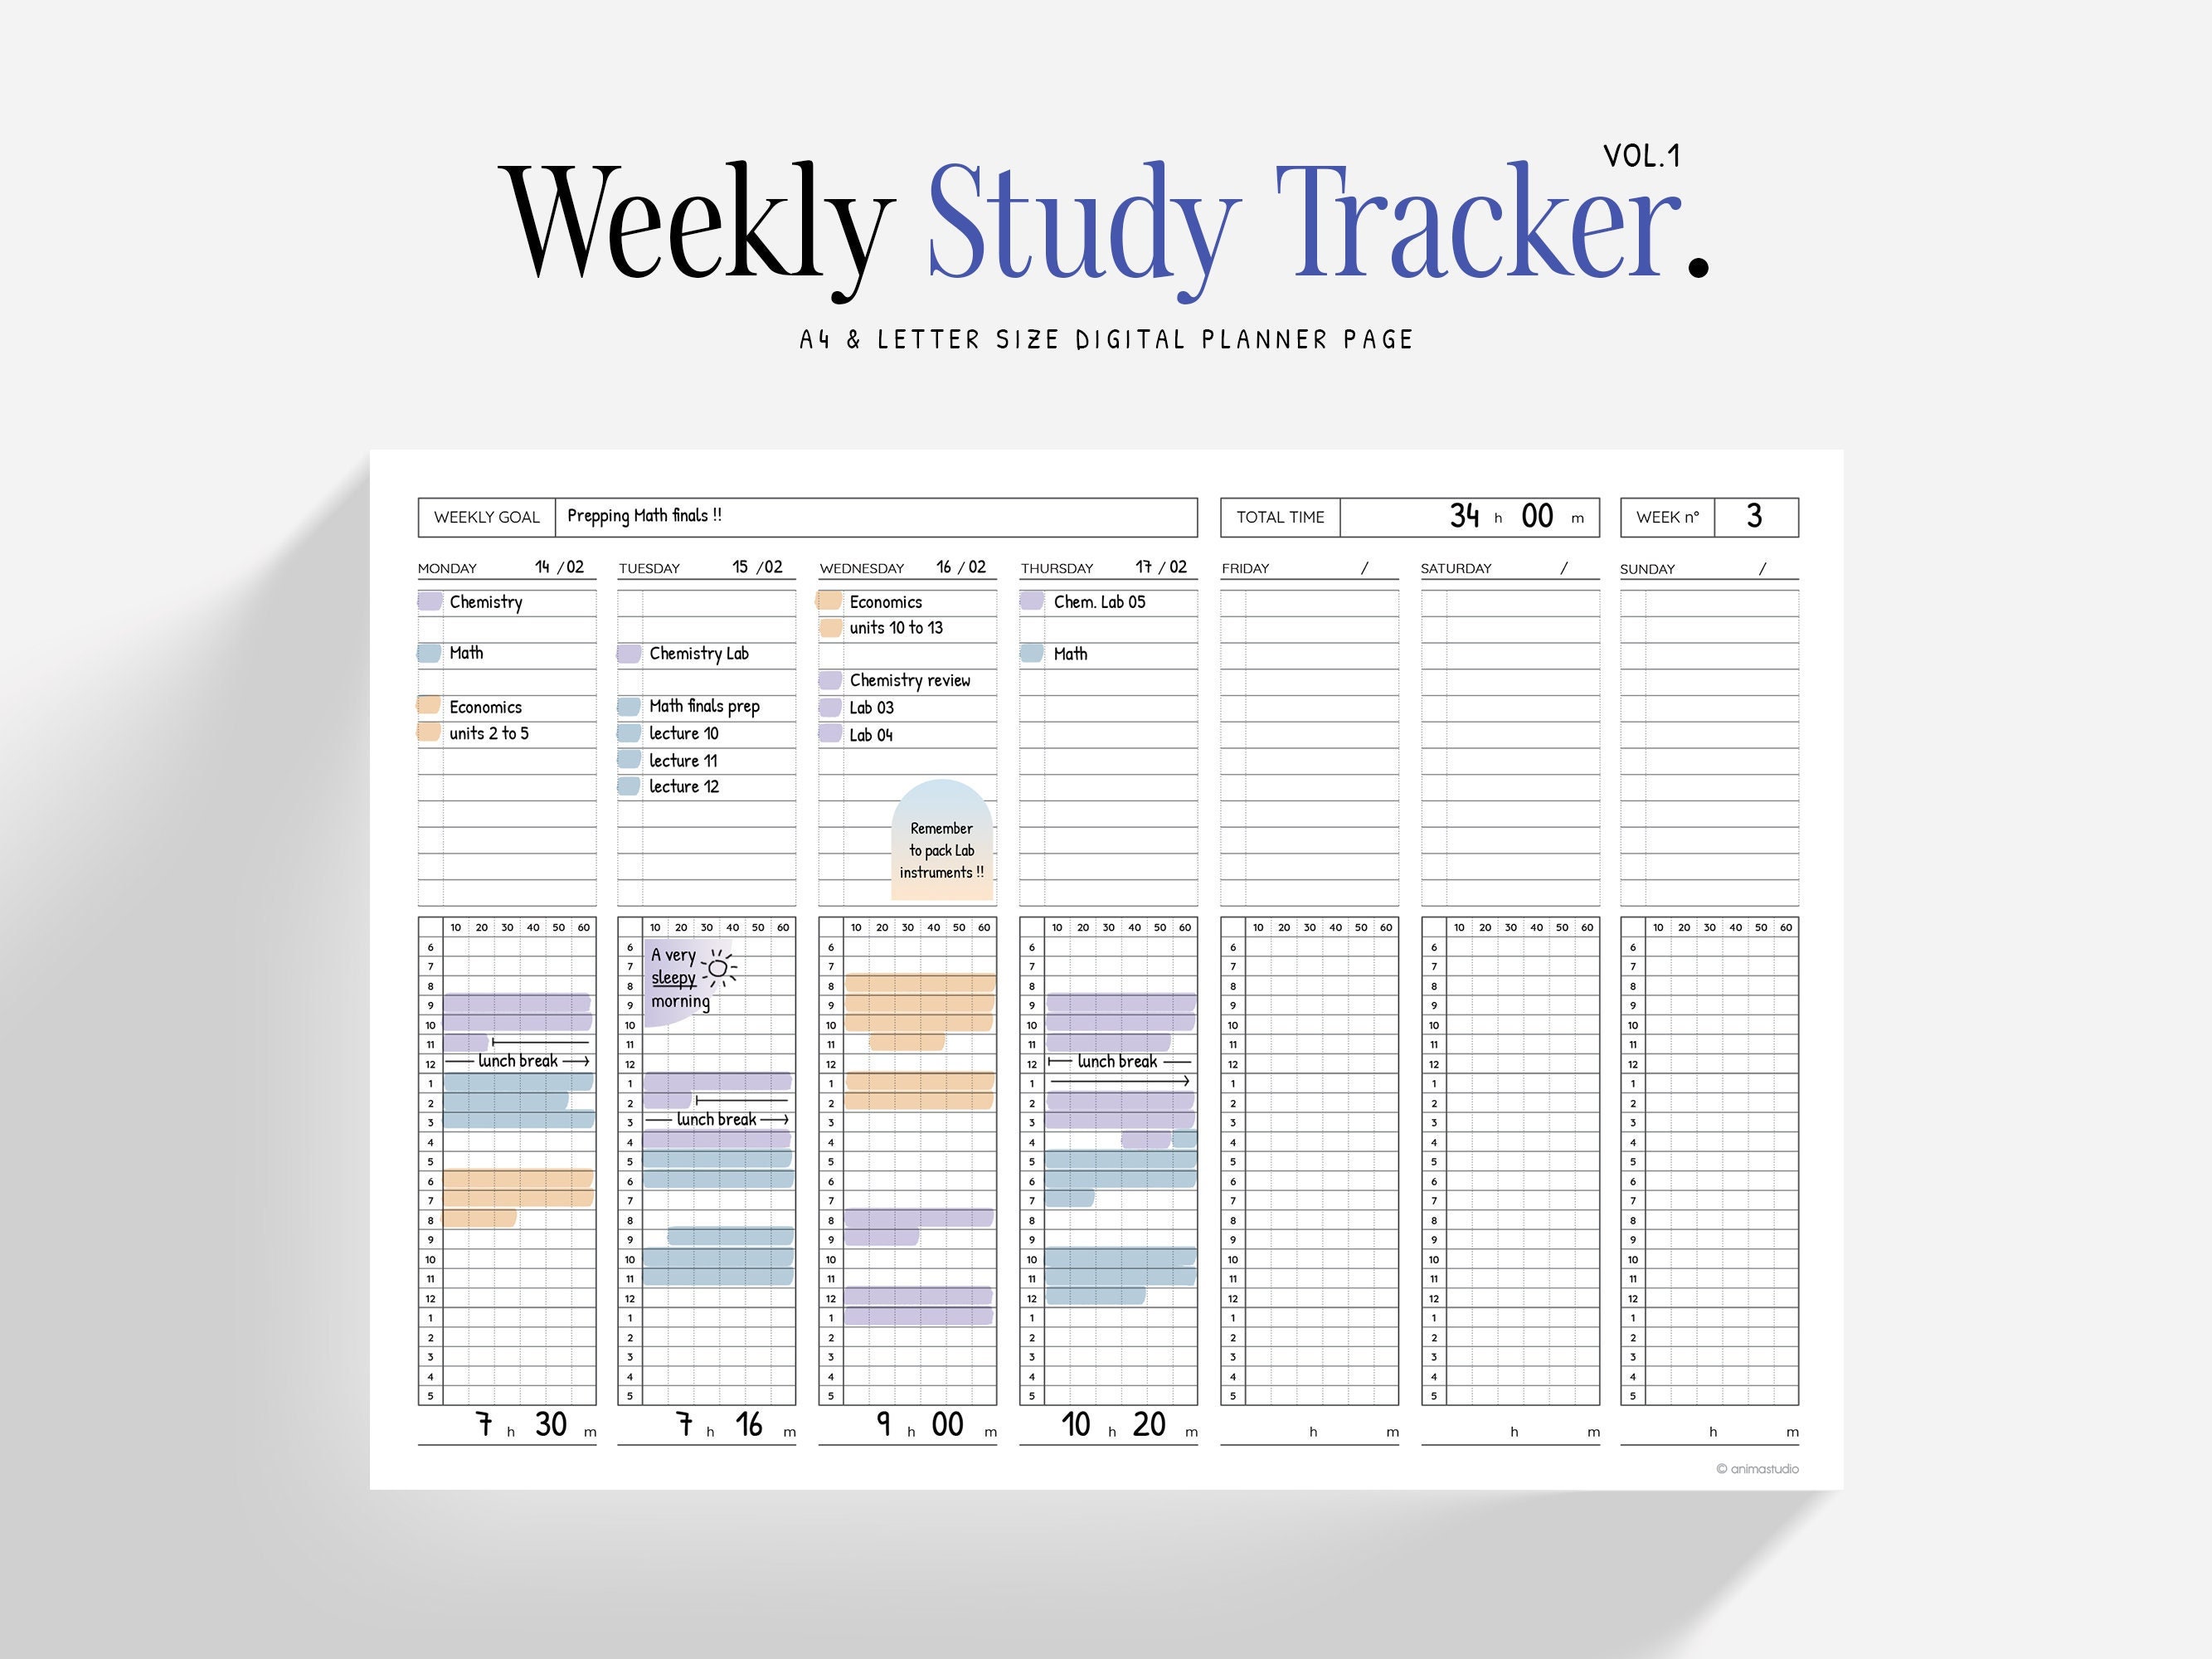 Lenovo Smart Paper GMAT Exam Study Planner and Tracker, vertical,  hyperlinked — Planning Atlas